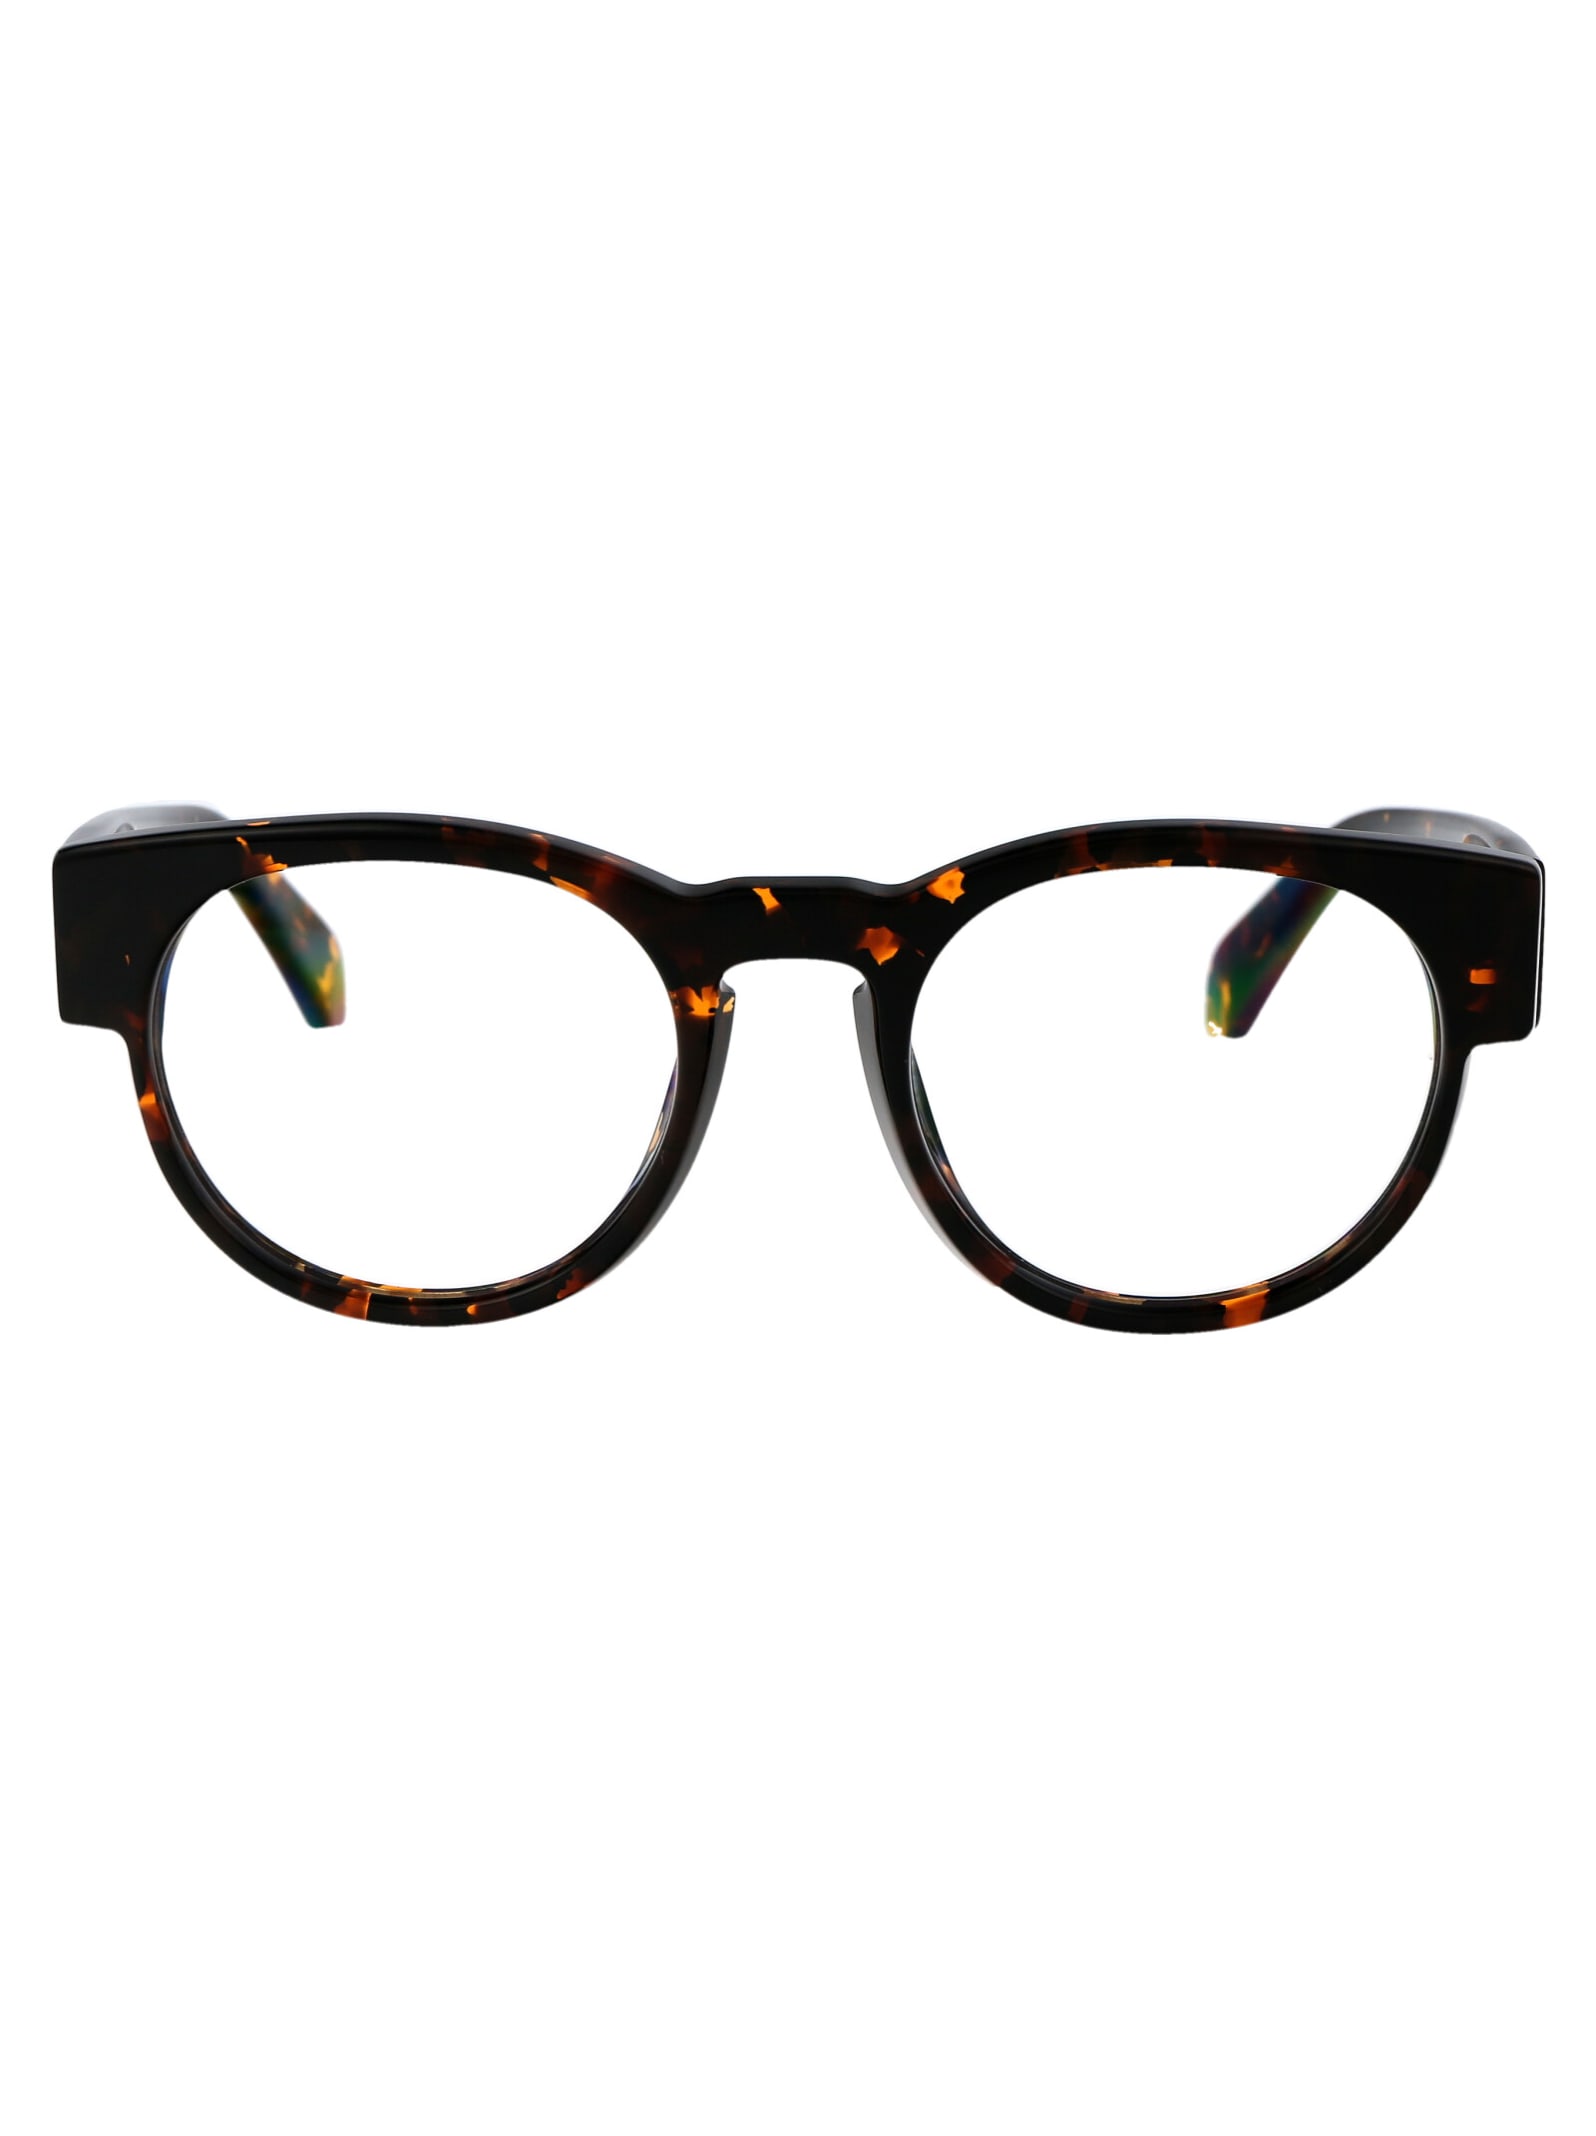 Optical Style 58 Glasses